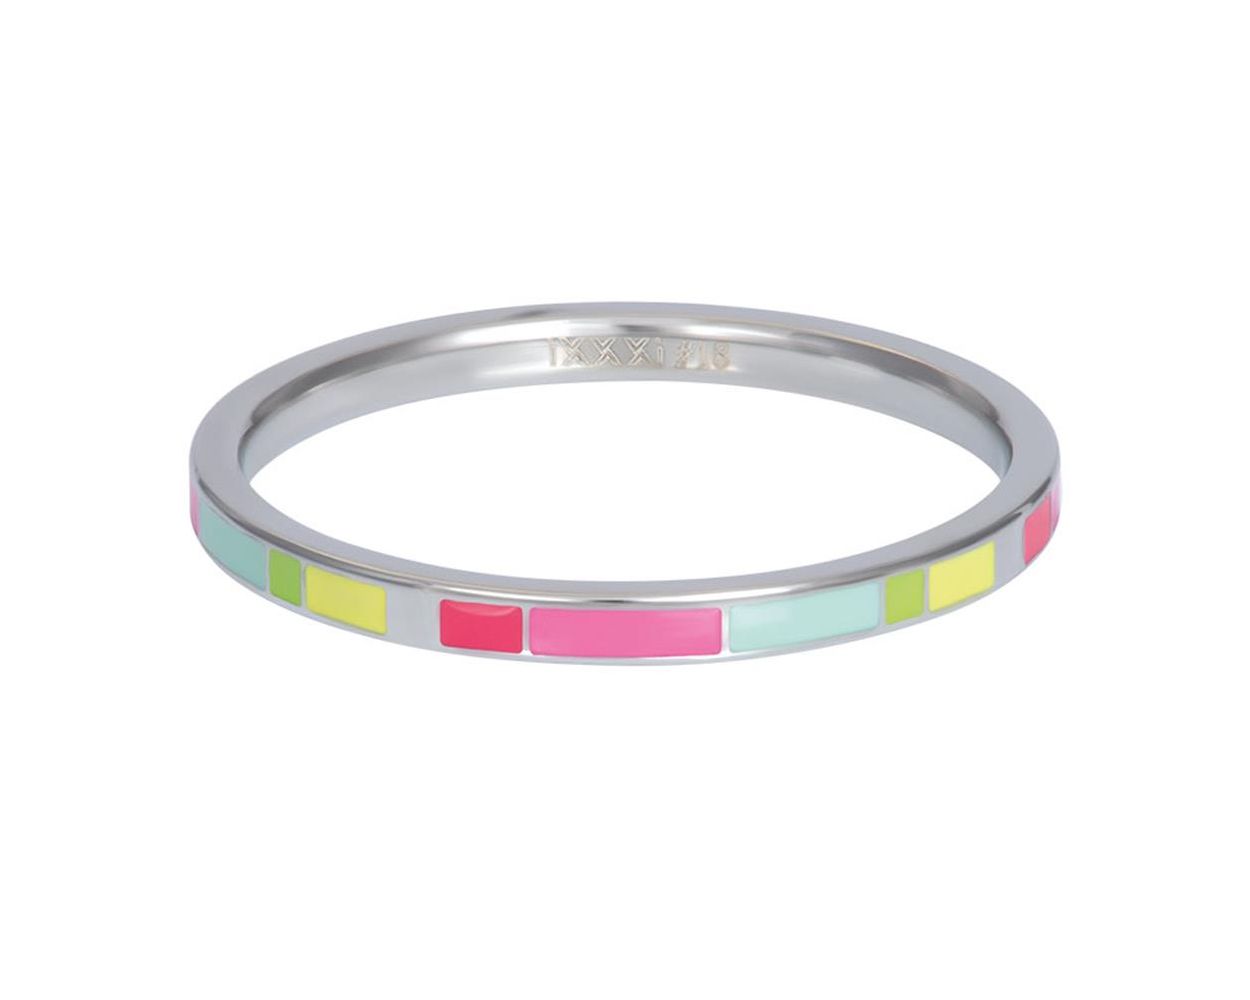 iXXXi Ring Multi Color - R02319